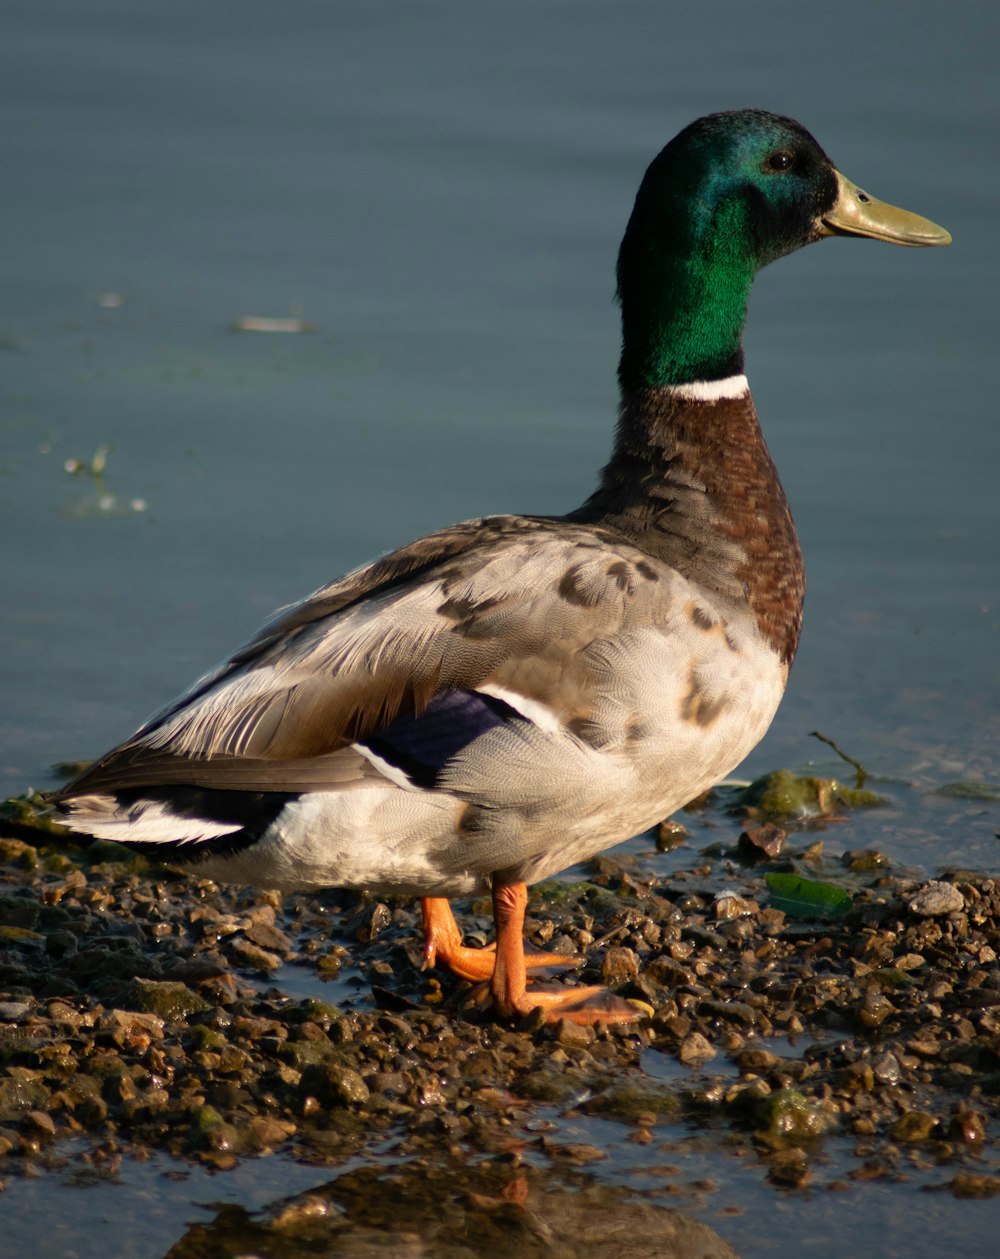 mallard duck on green grass near body of water during daytime